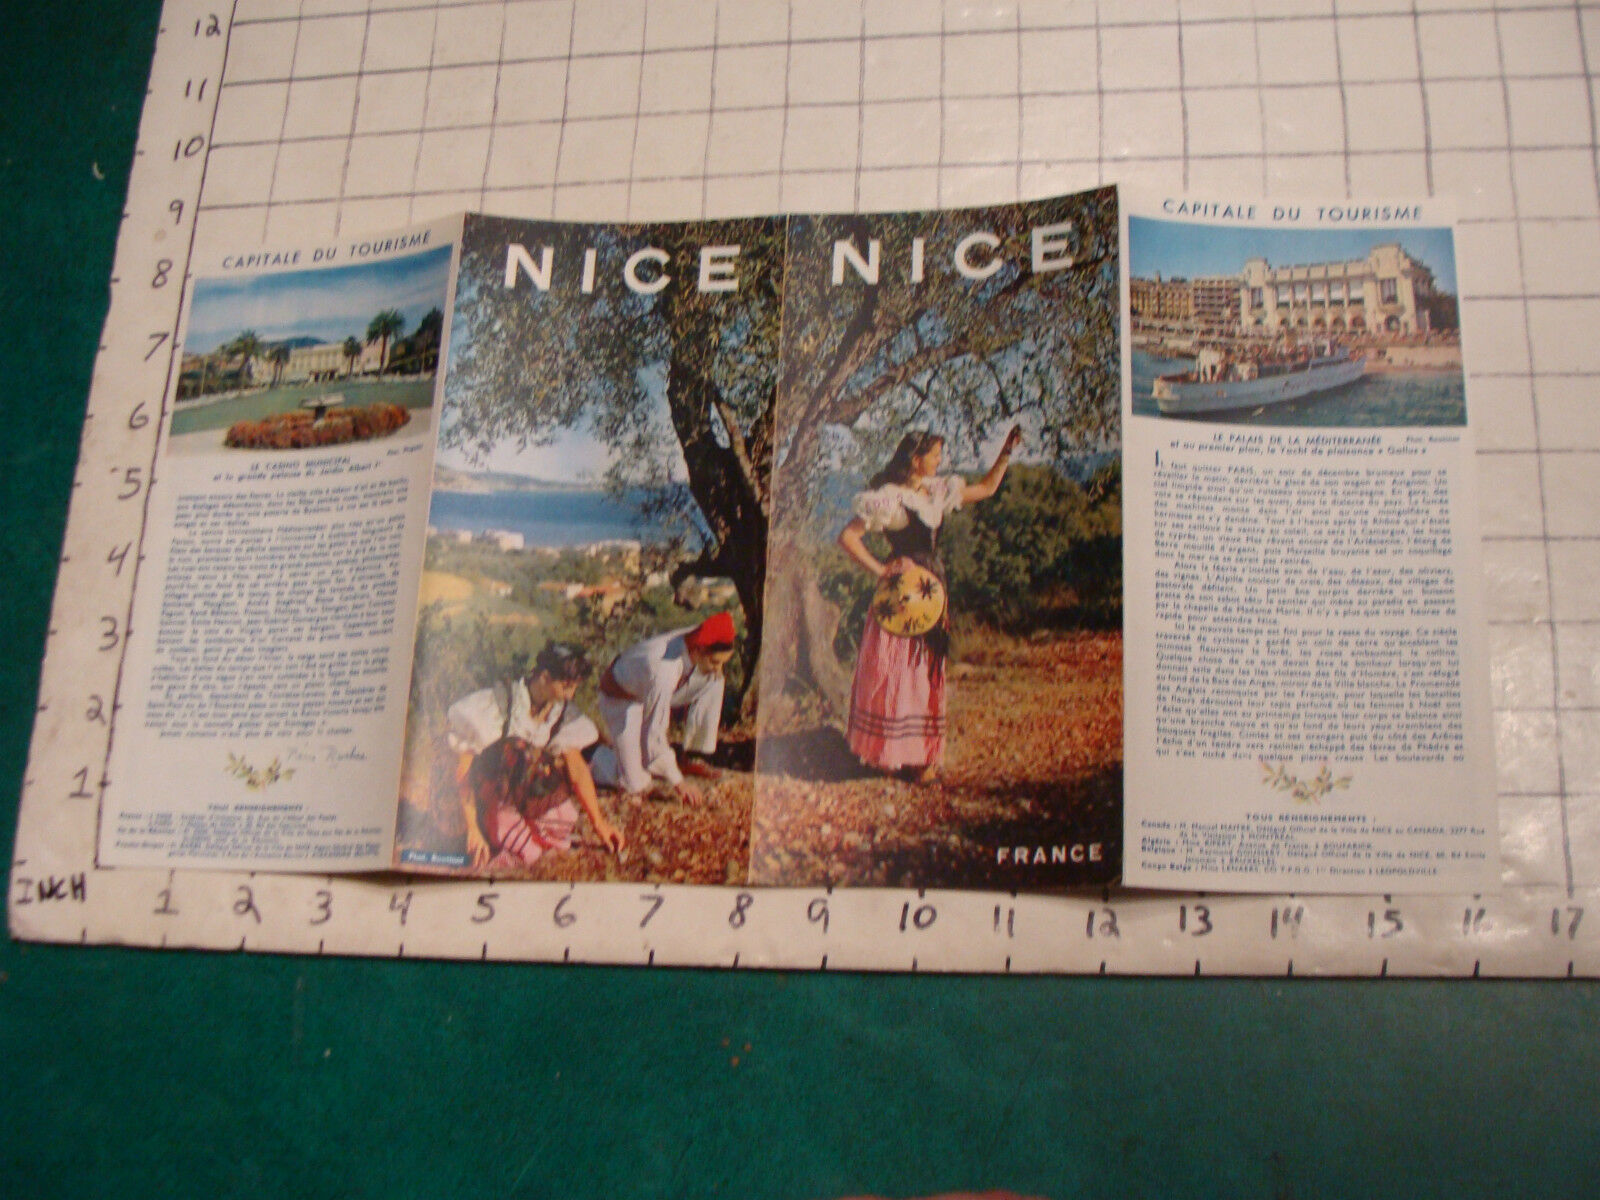  GREAT VINTAGE  brochure: NICE France 1954